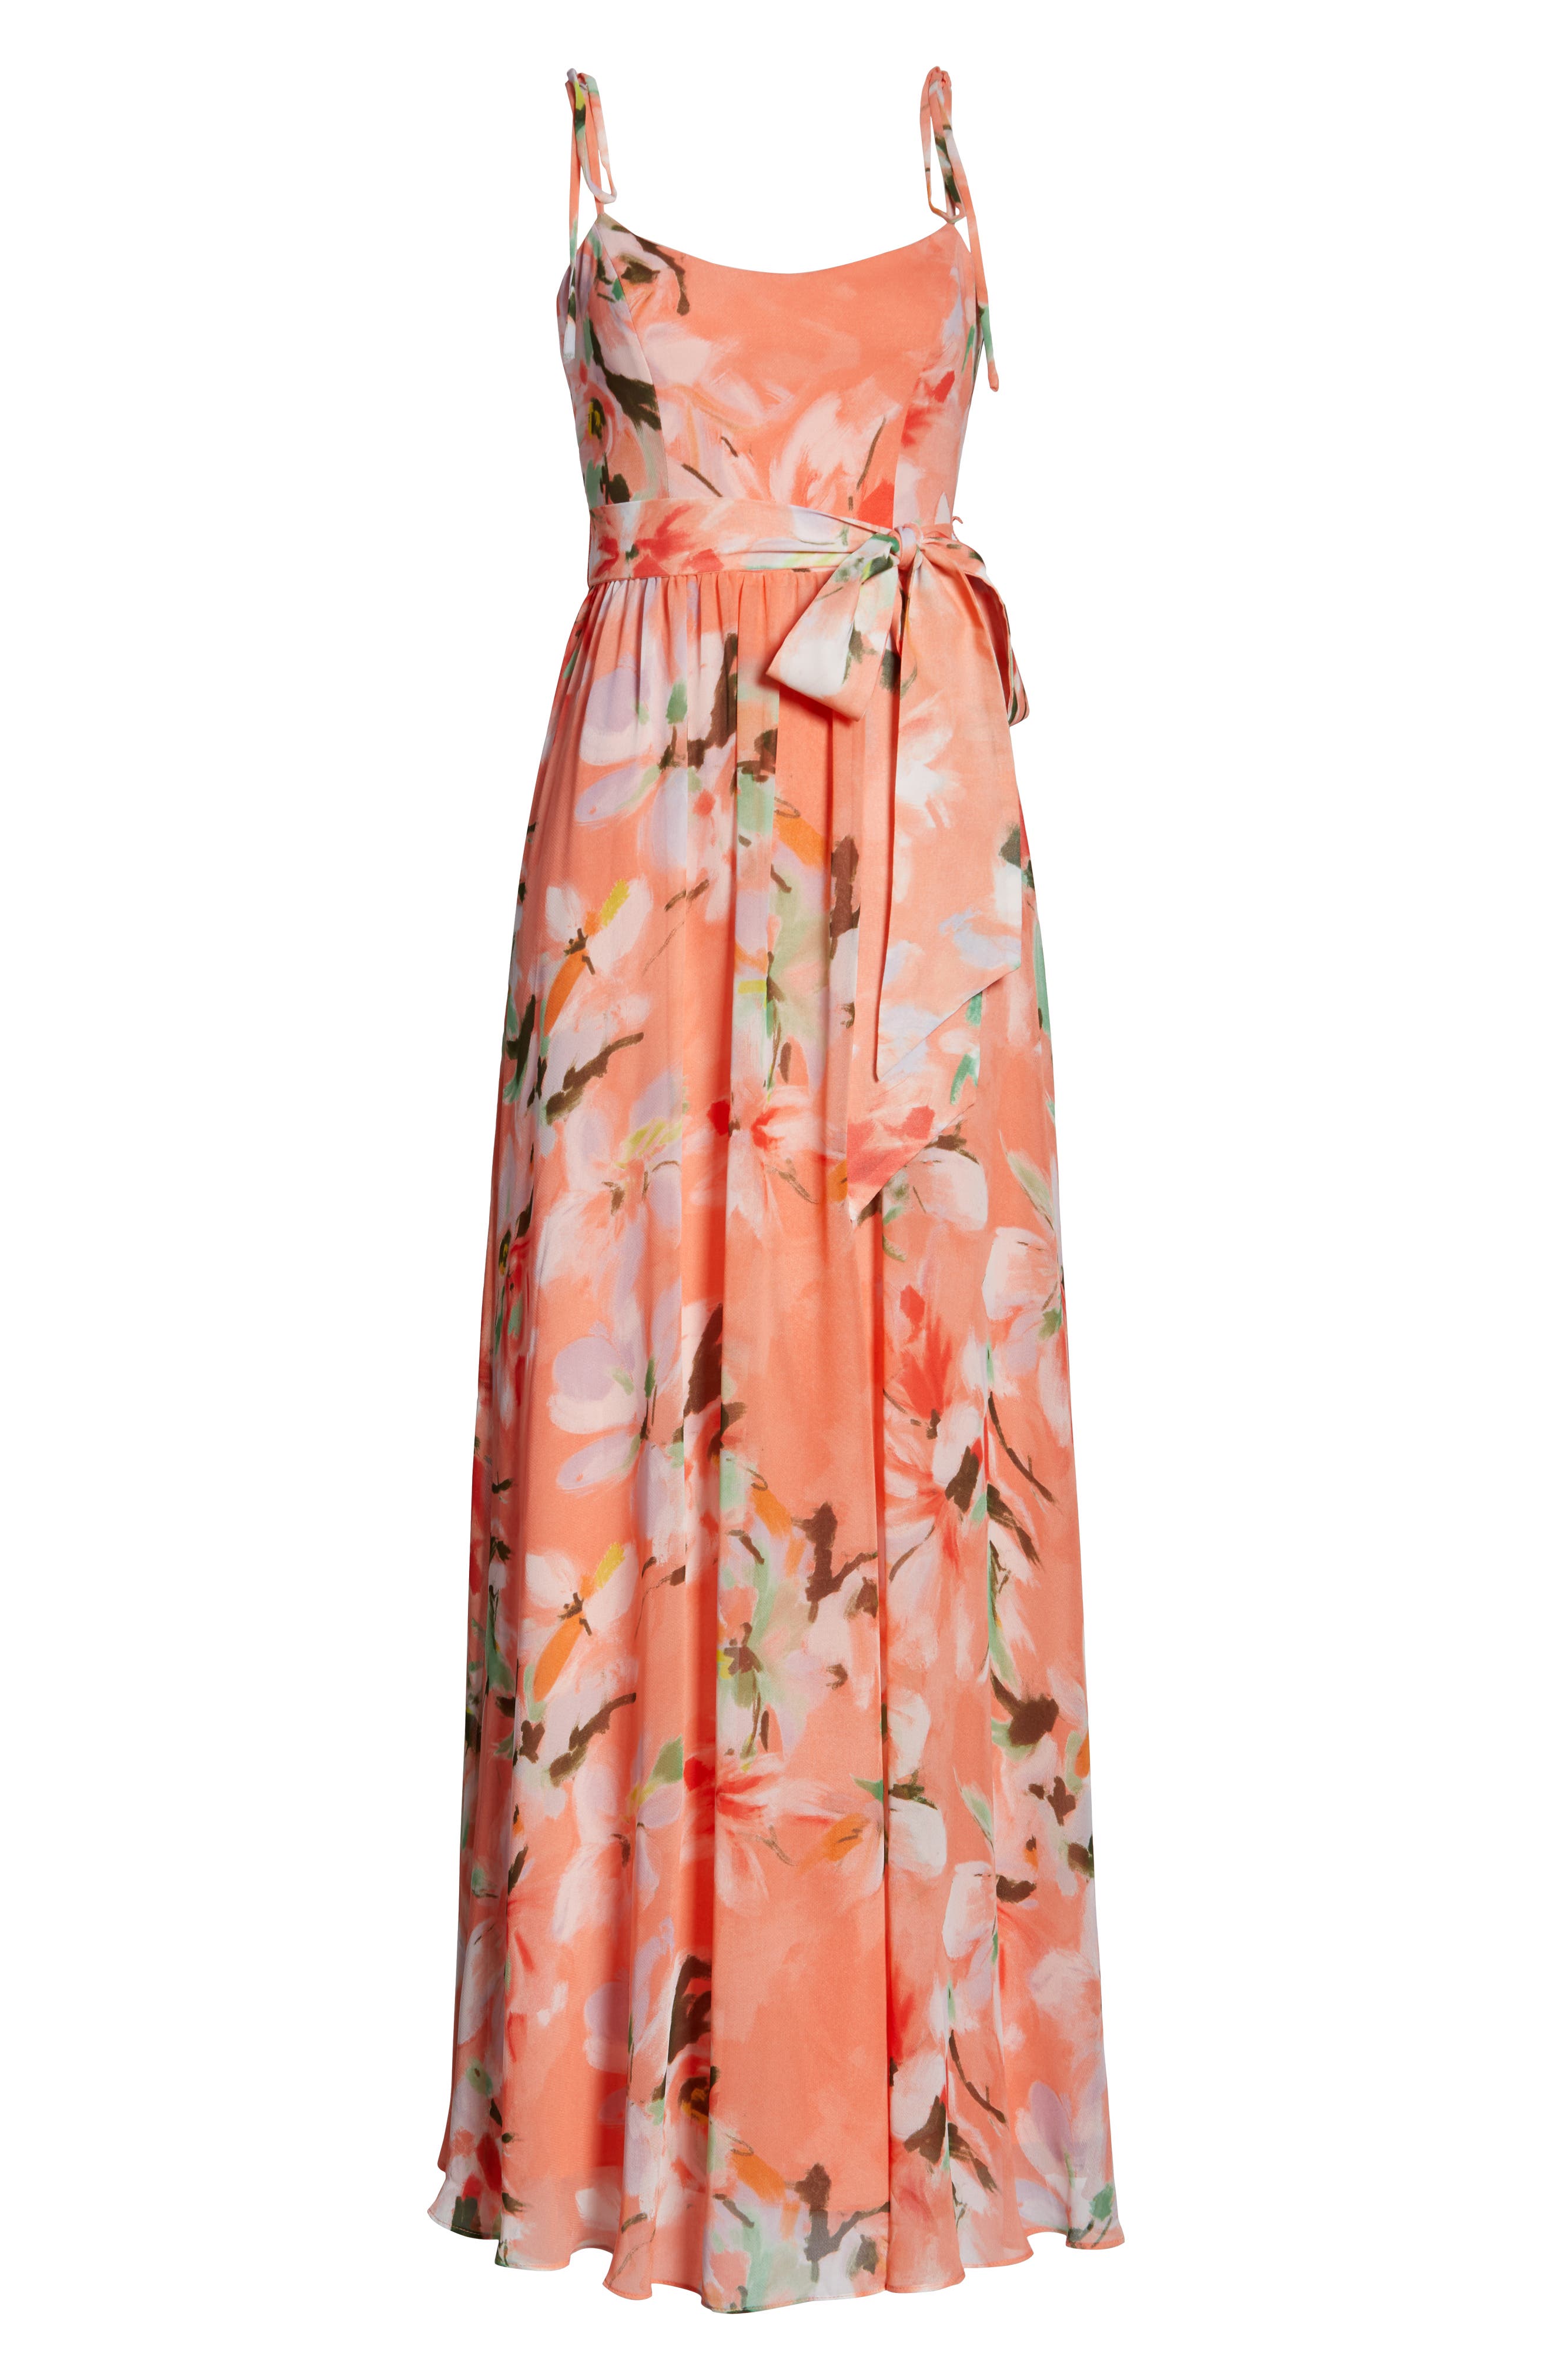 hollie floral maxi dress